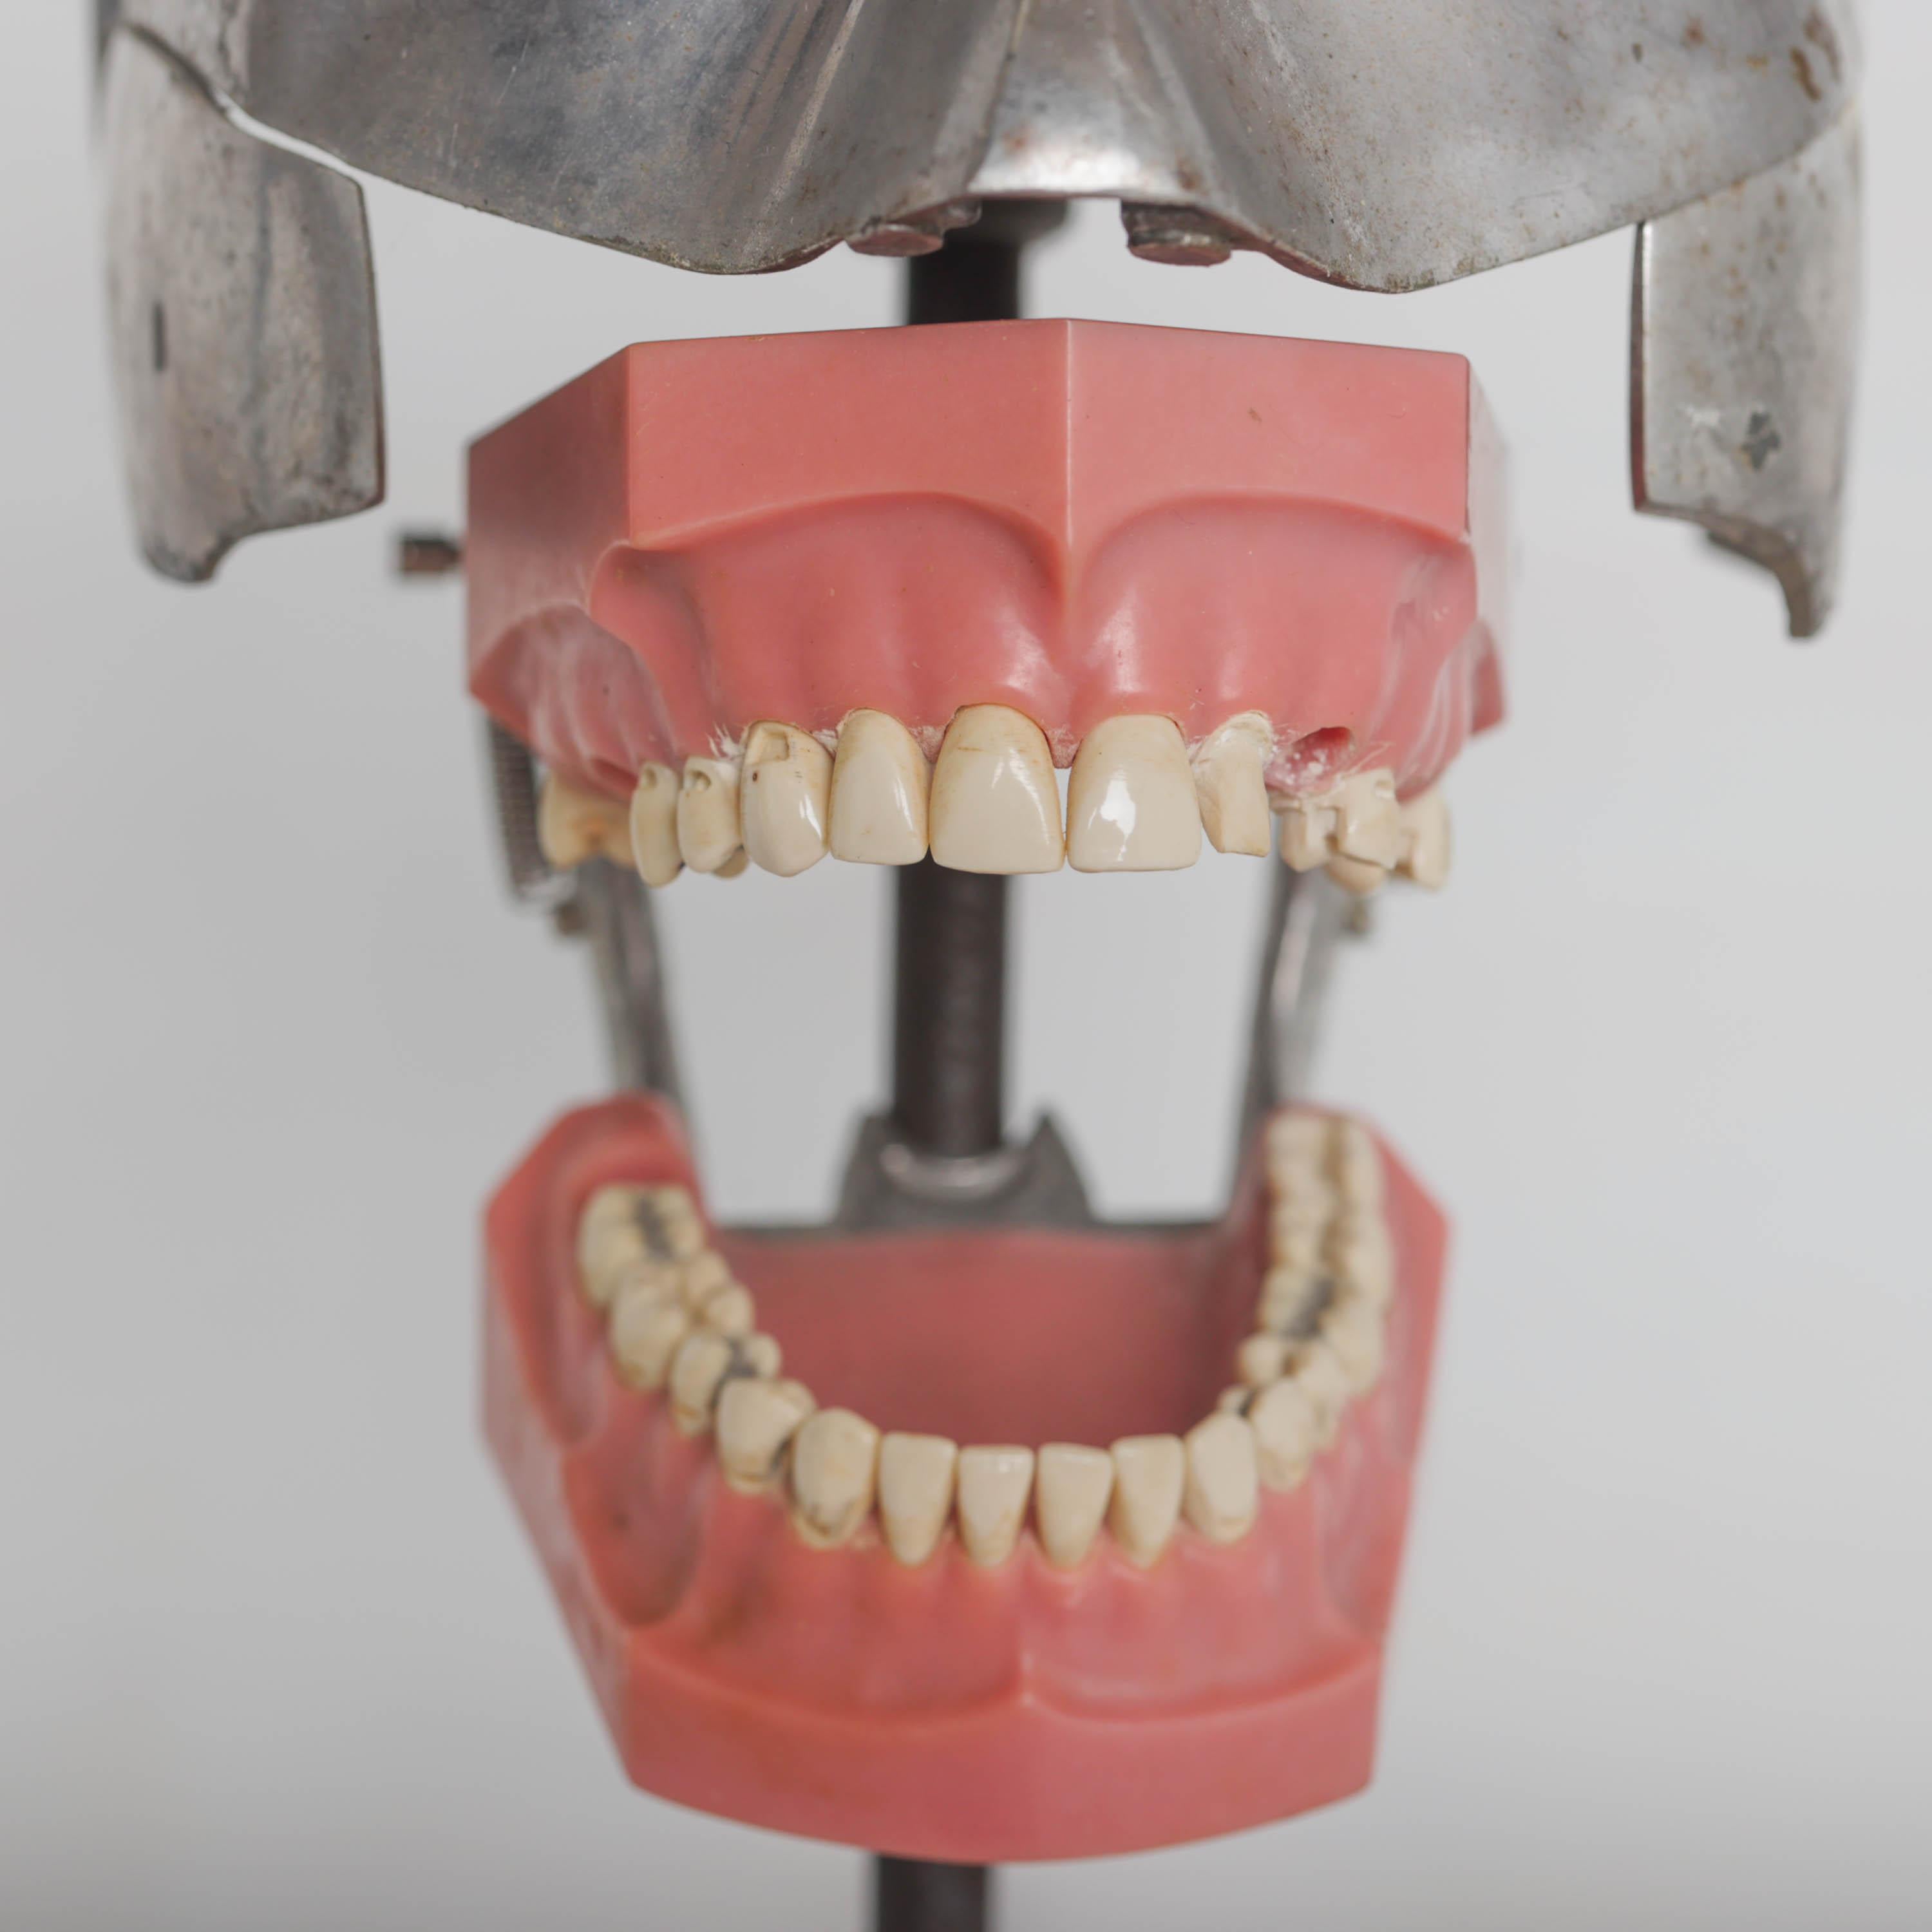 Dental Phantom Head Model with Rubber Head Mask 4